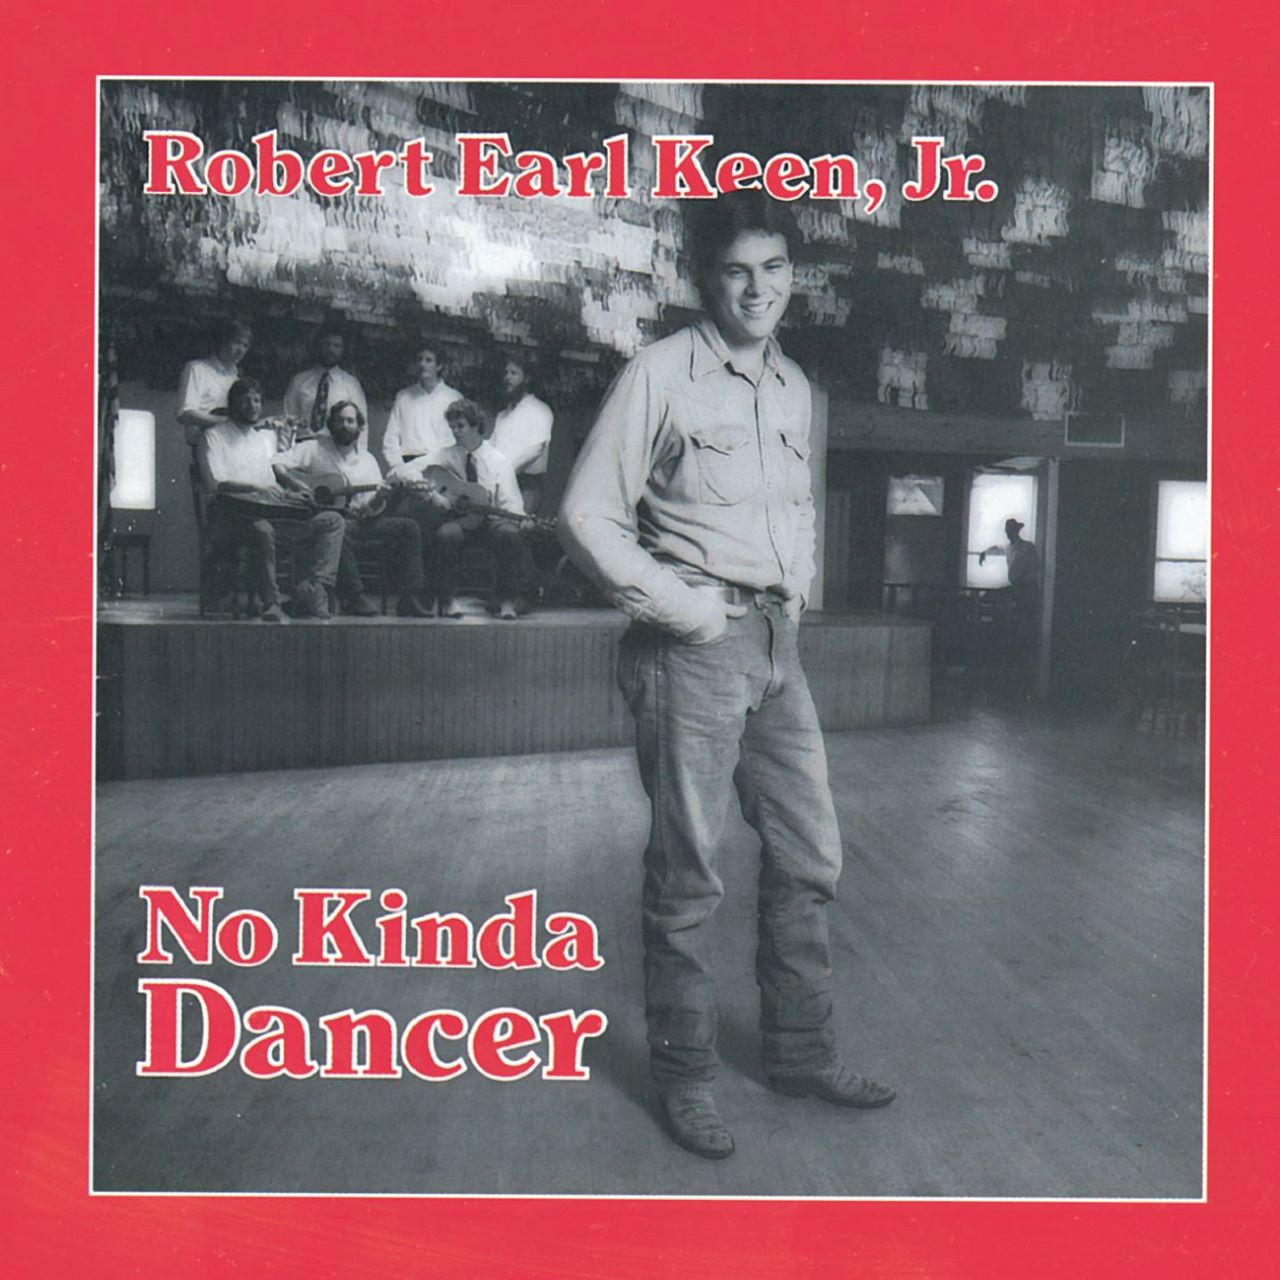 Robert Earl Keen Jr. - No Kinda Dancer cover album